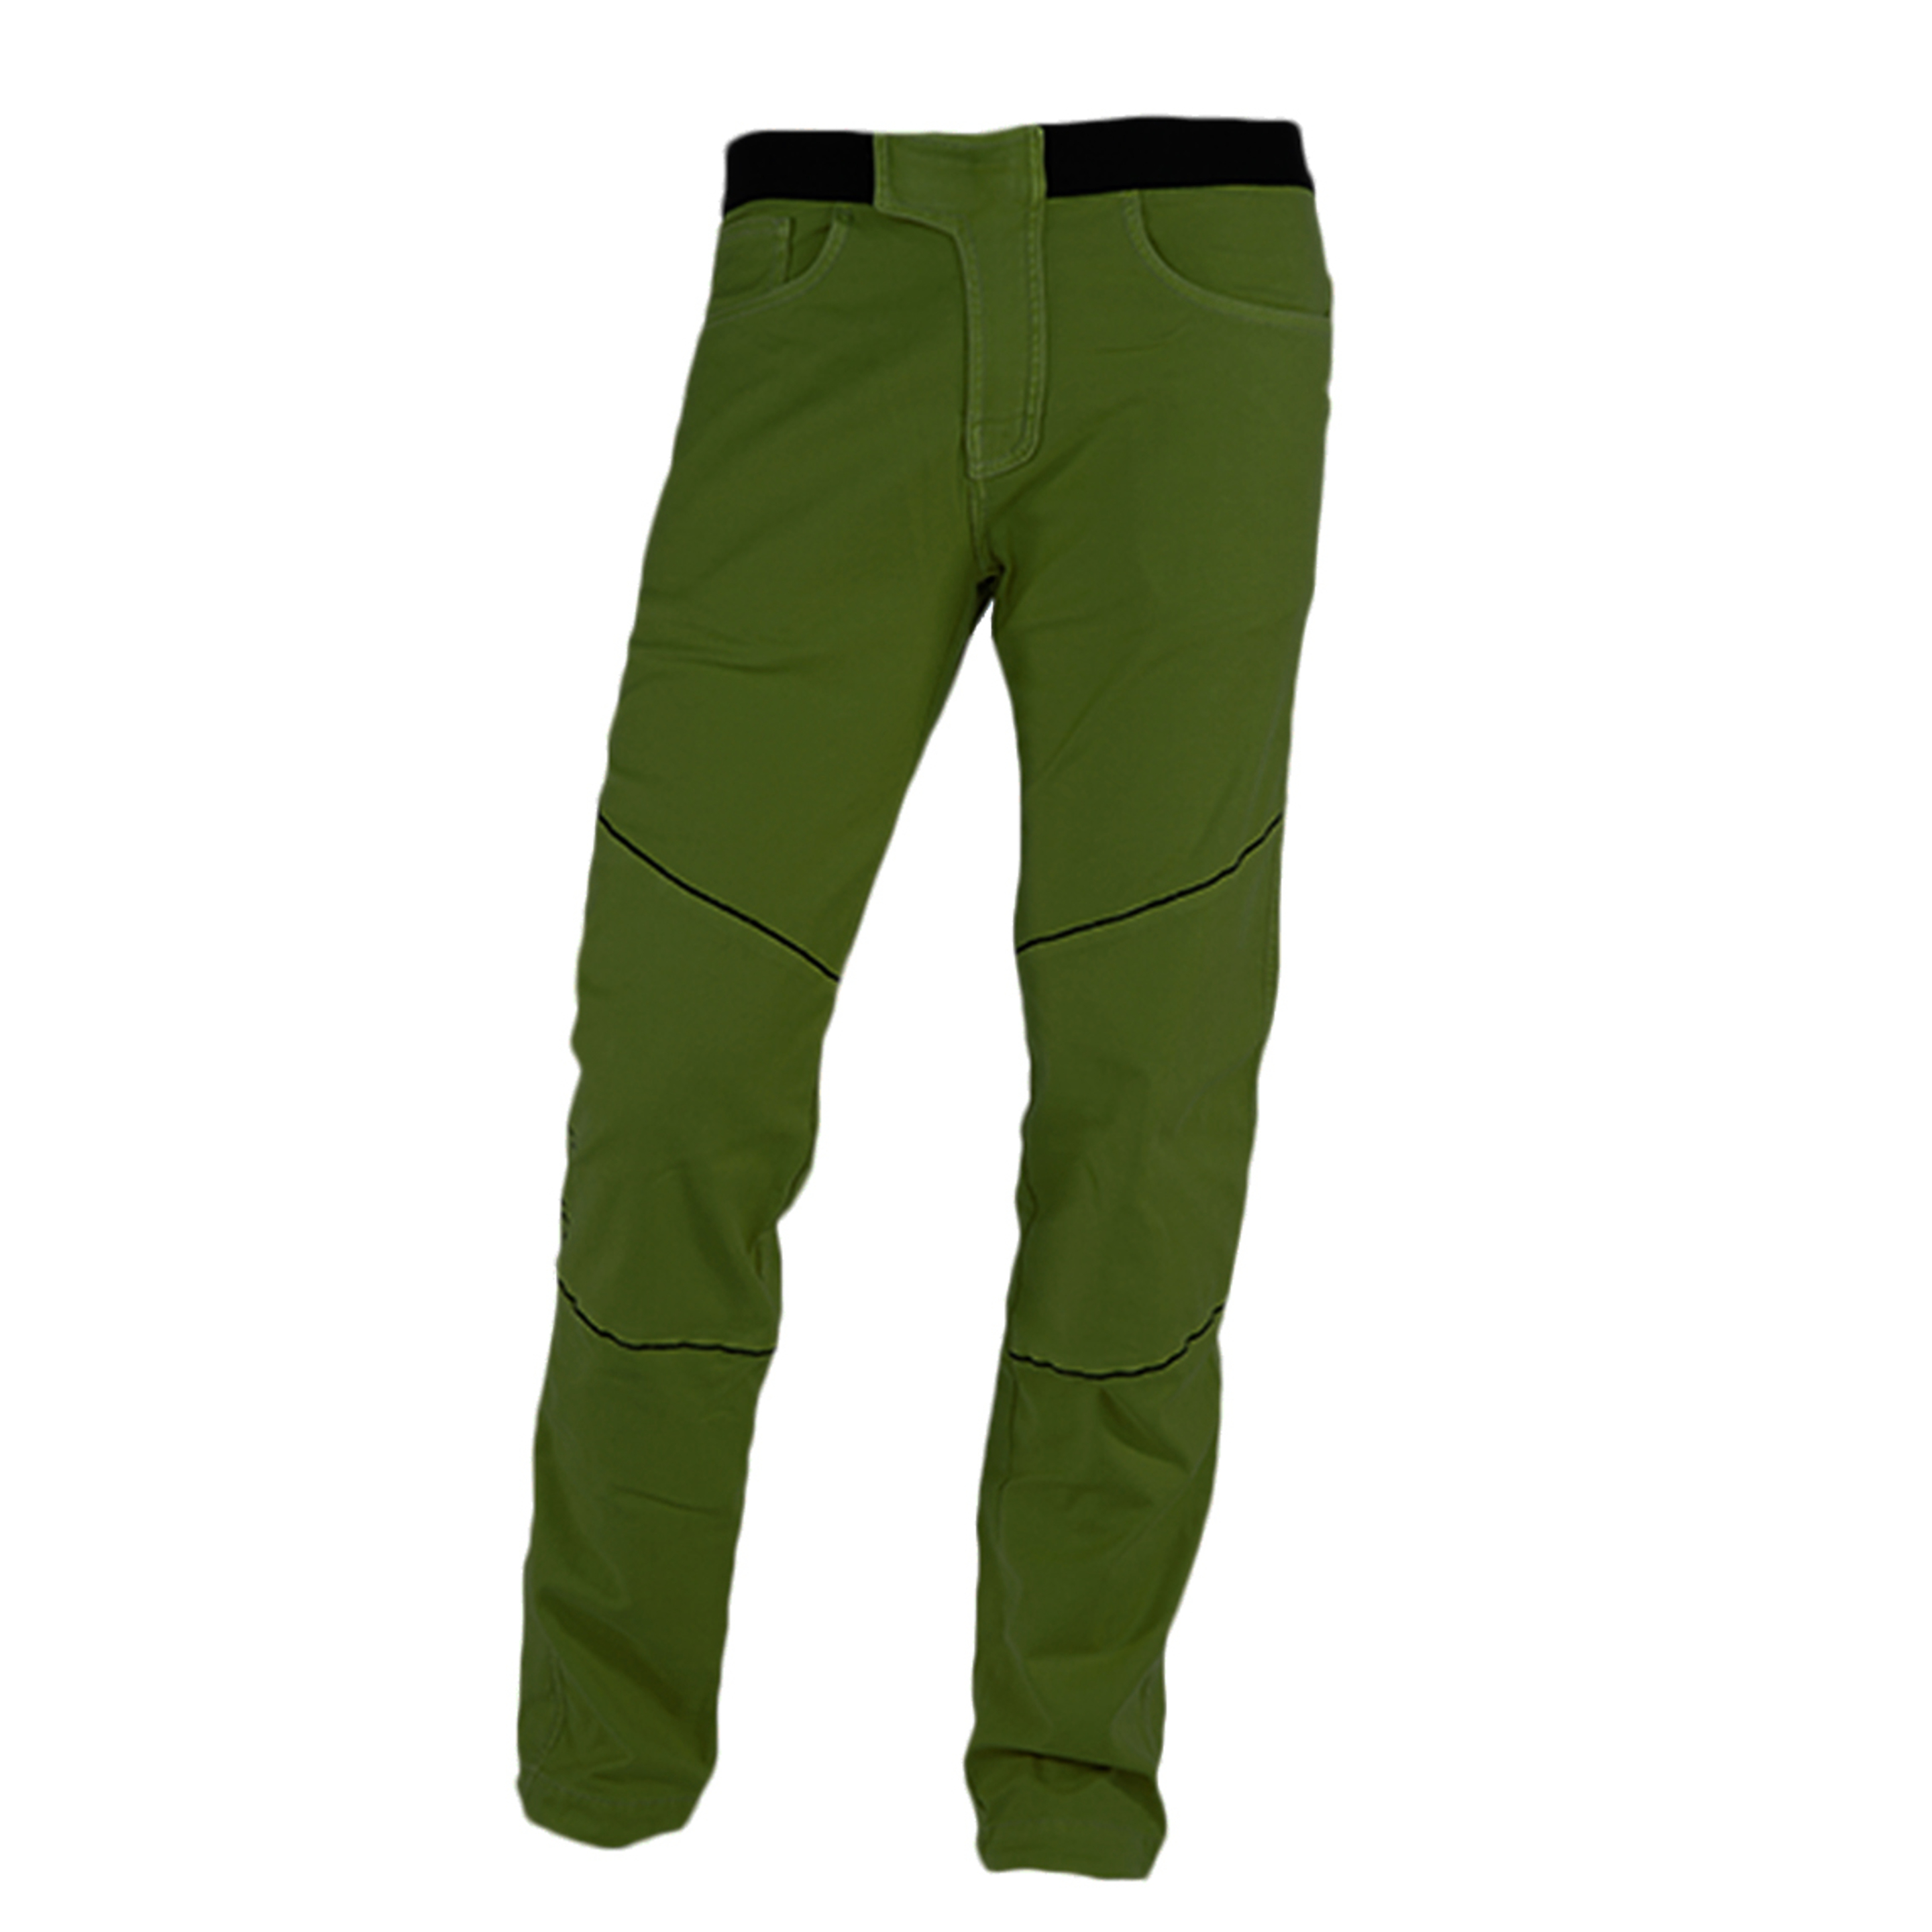 Pantalón Escalada Jeanstrack Turia - Verde Oscuro - Turia Eco Musgo  MKP